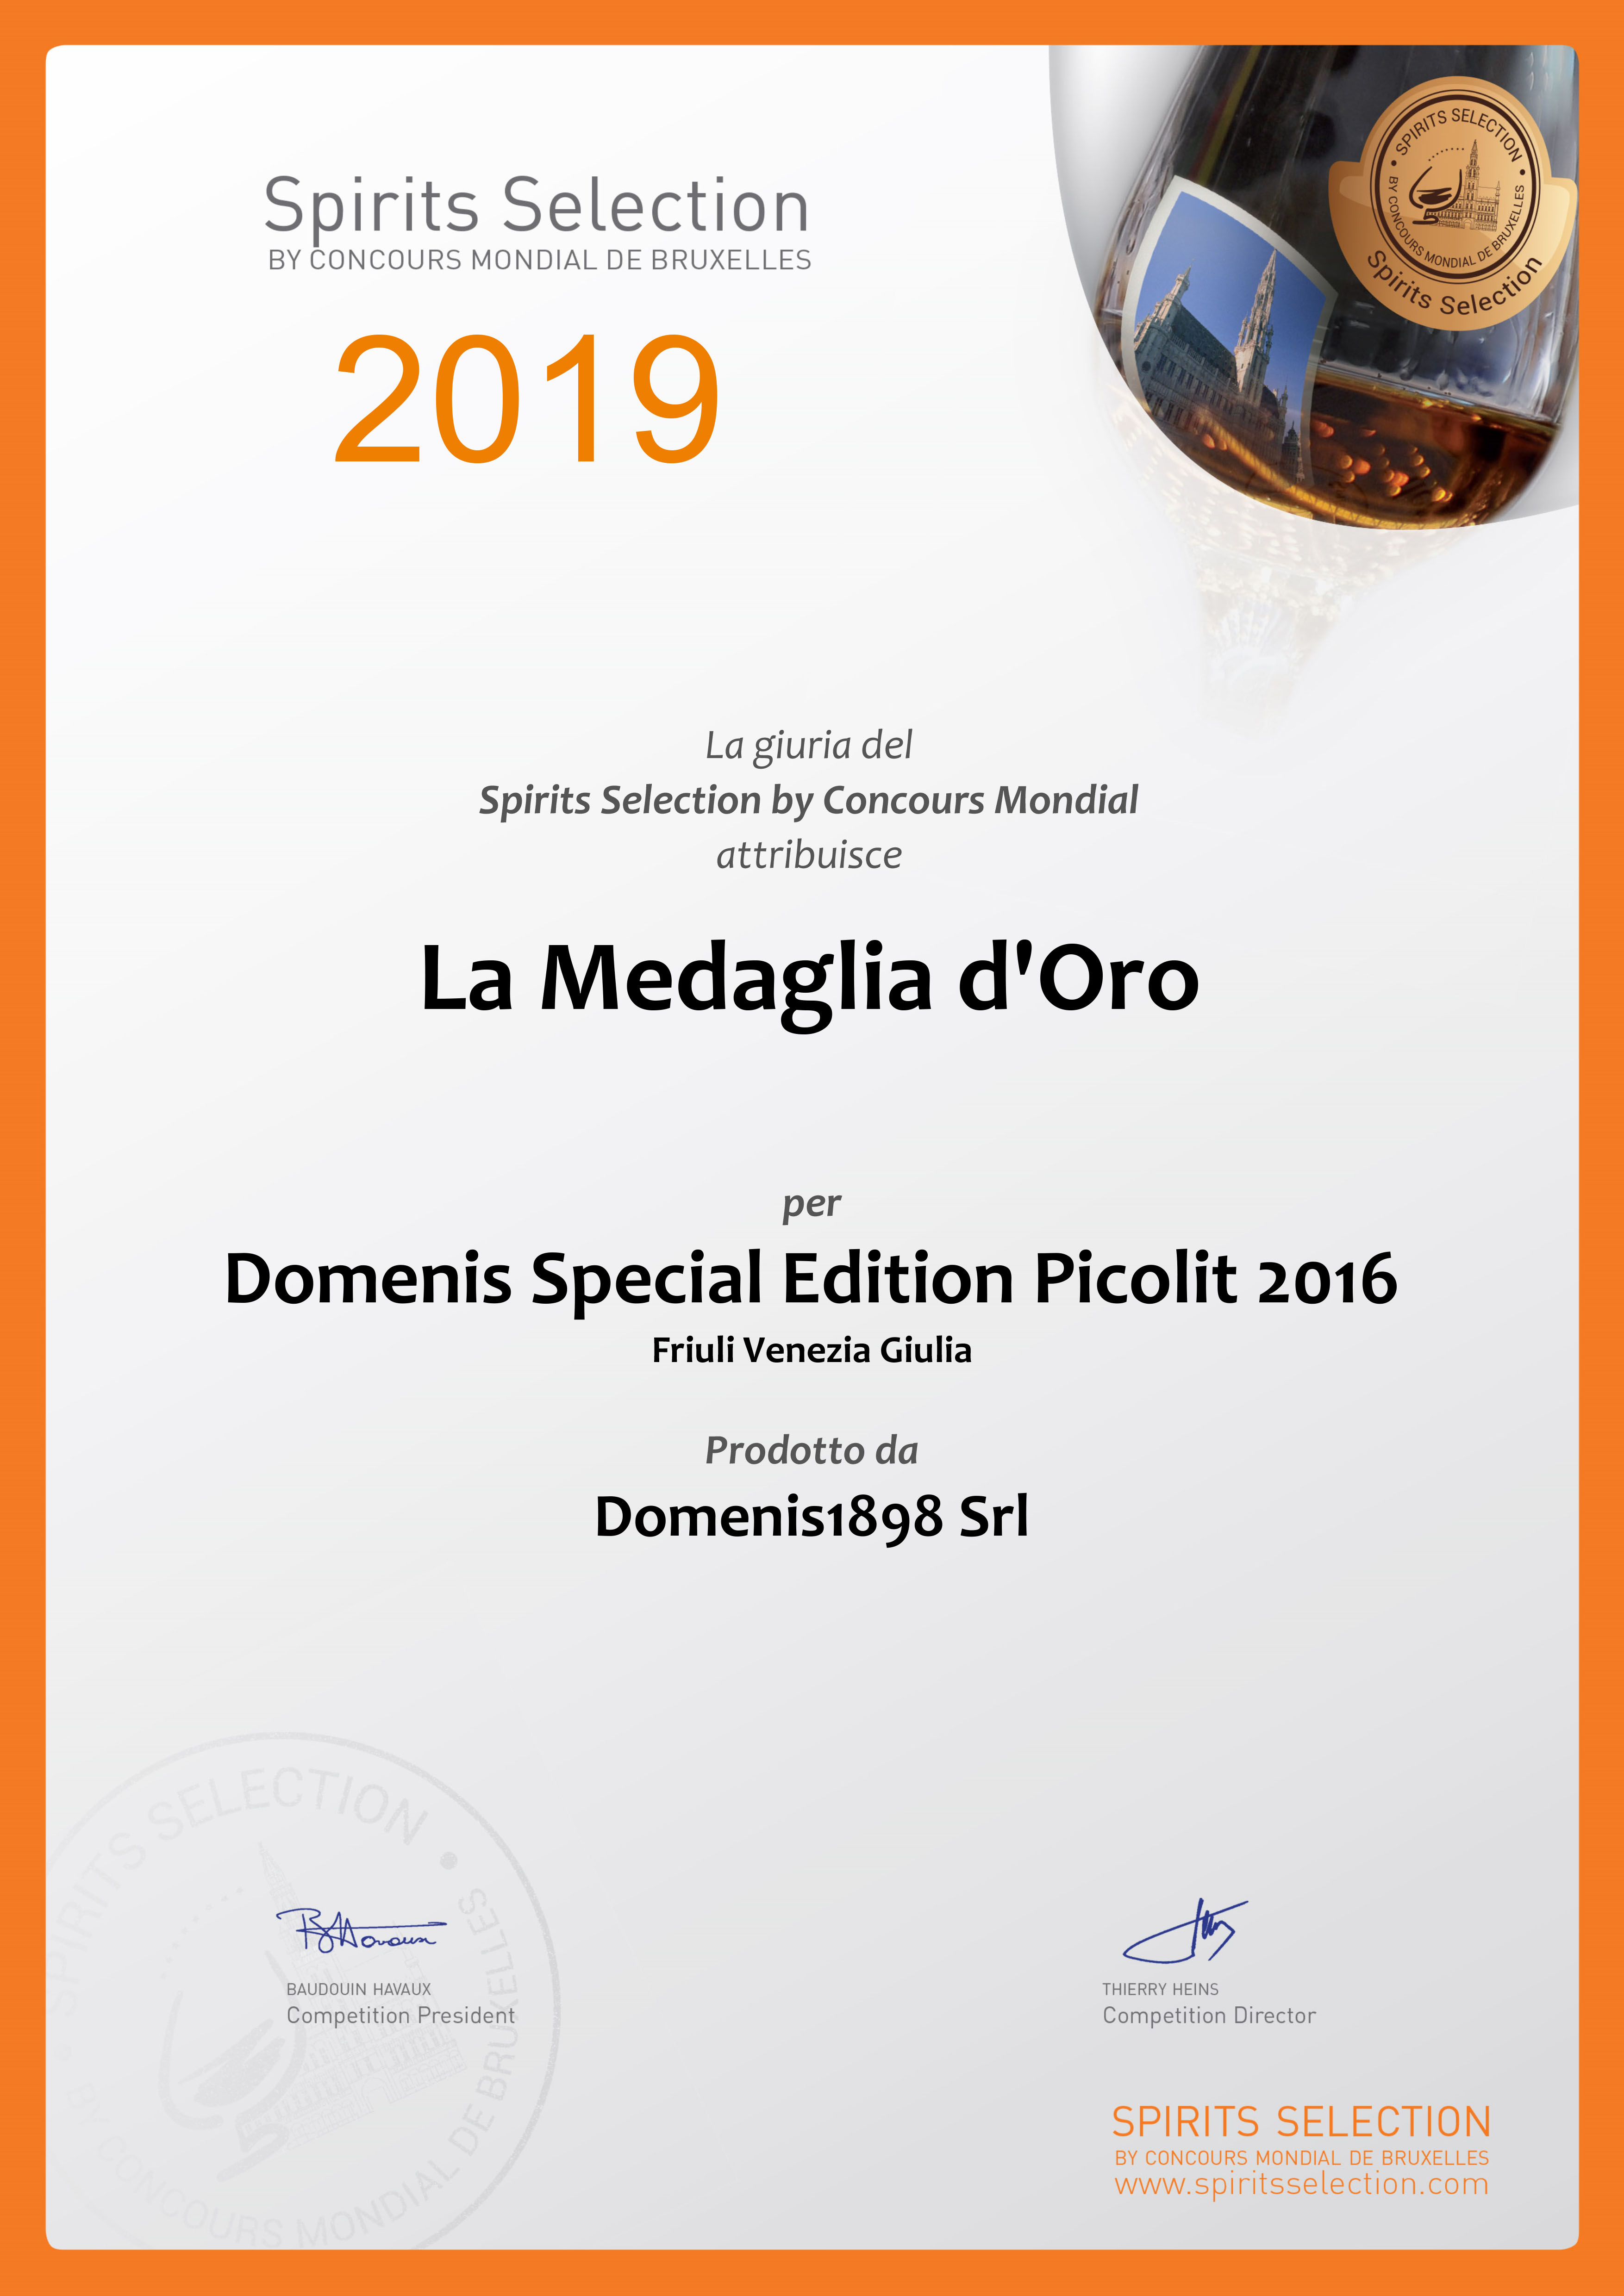 SPIRITS SELECTION by Concours Mondial de Bruxelles_2019 – GOLD MEDAL – DOMENIS SPECIAL EDITION PICOLIT